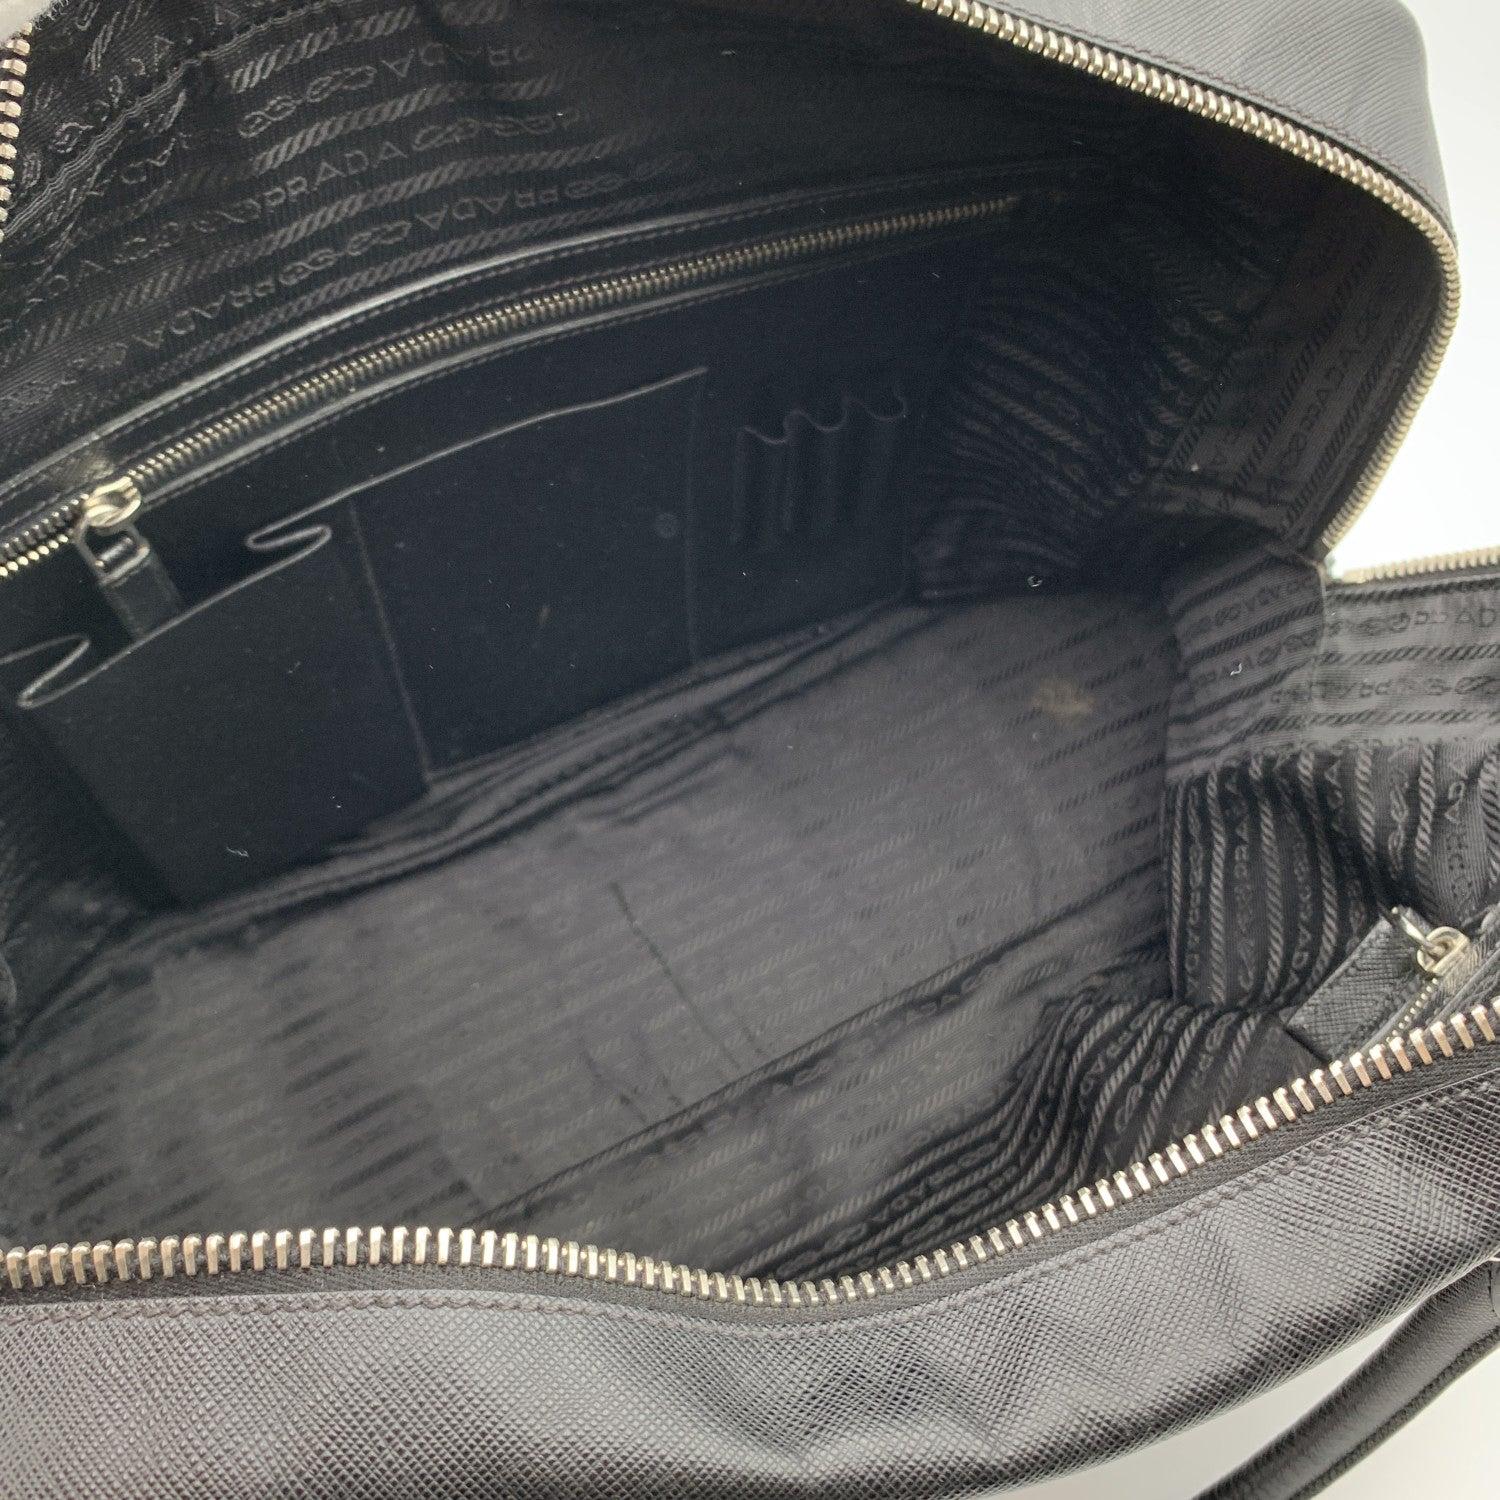 Prada Black Saffiano Leather Briefcase Satchel Zip Top Work Bag For Sale 1